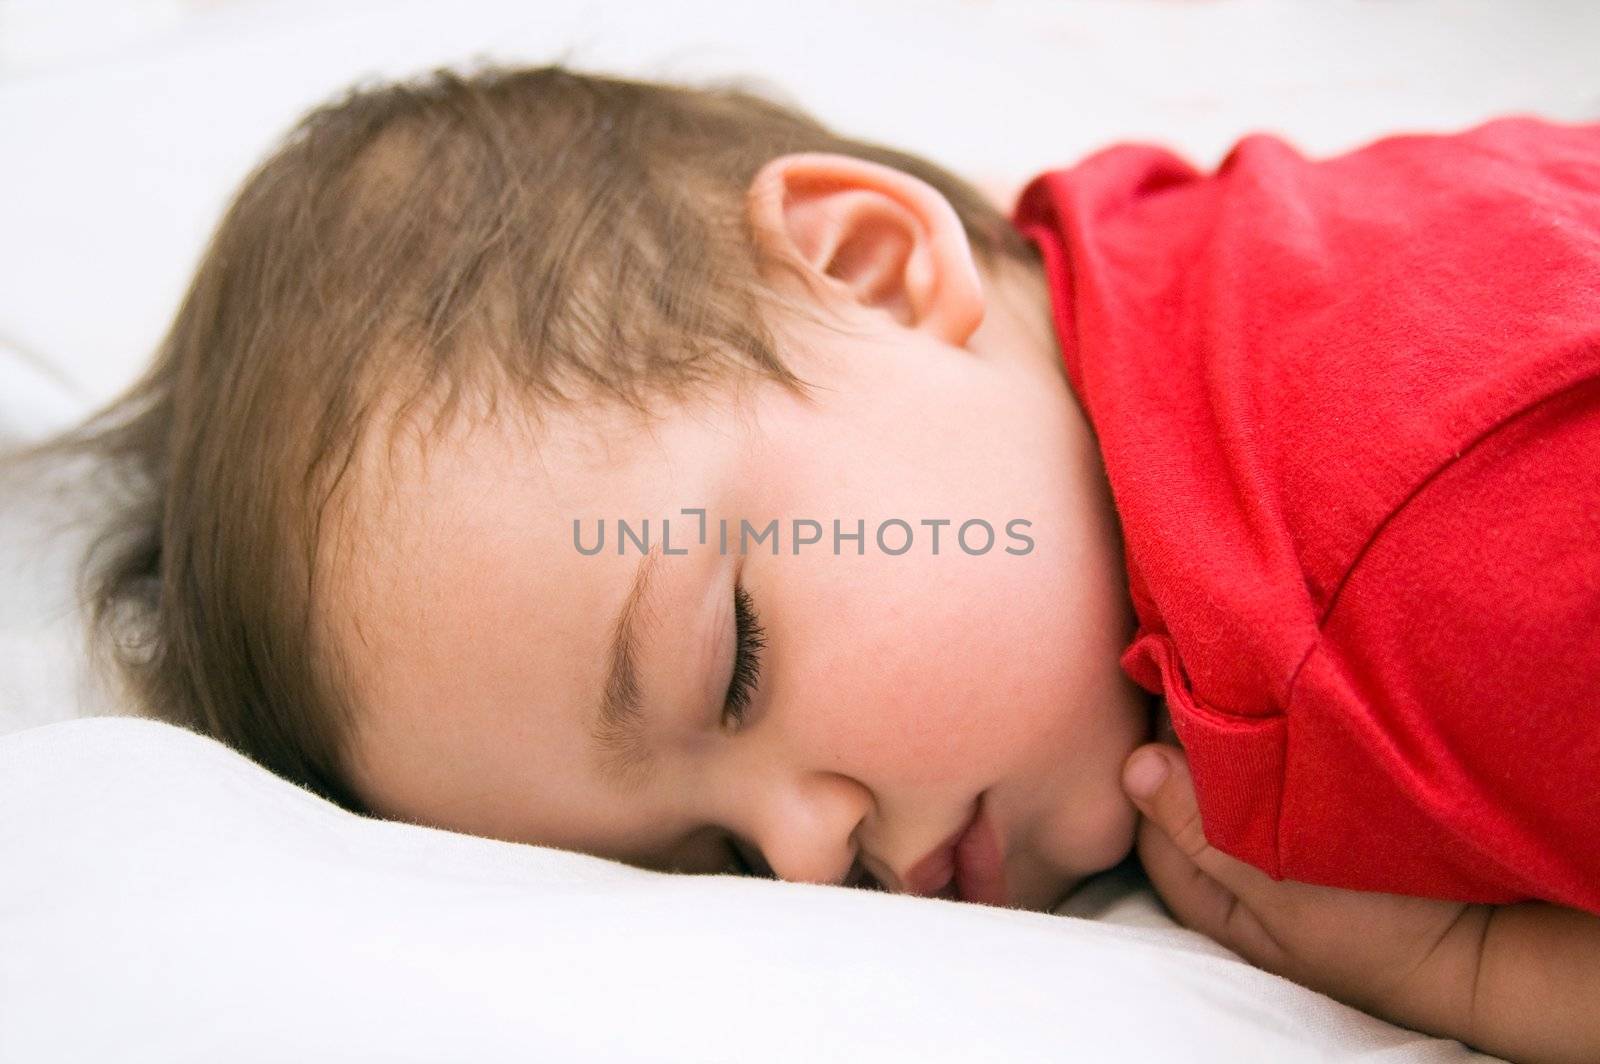 Boy in red dress sleeping on bed by lilsla